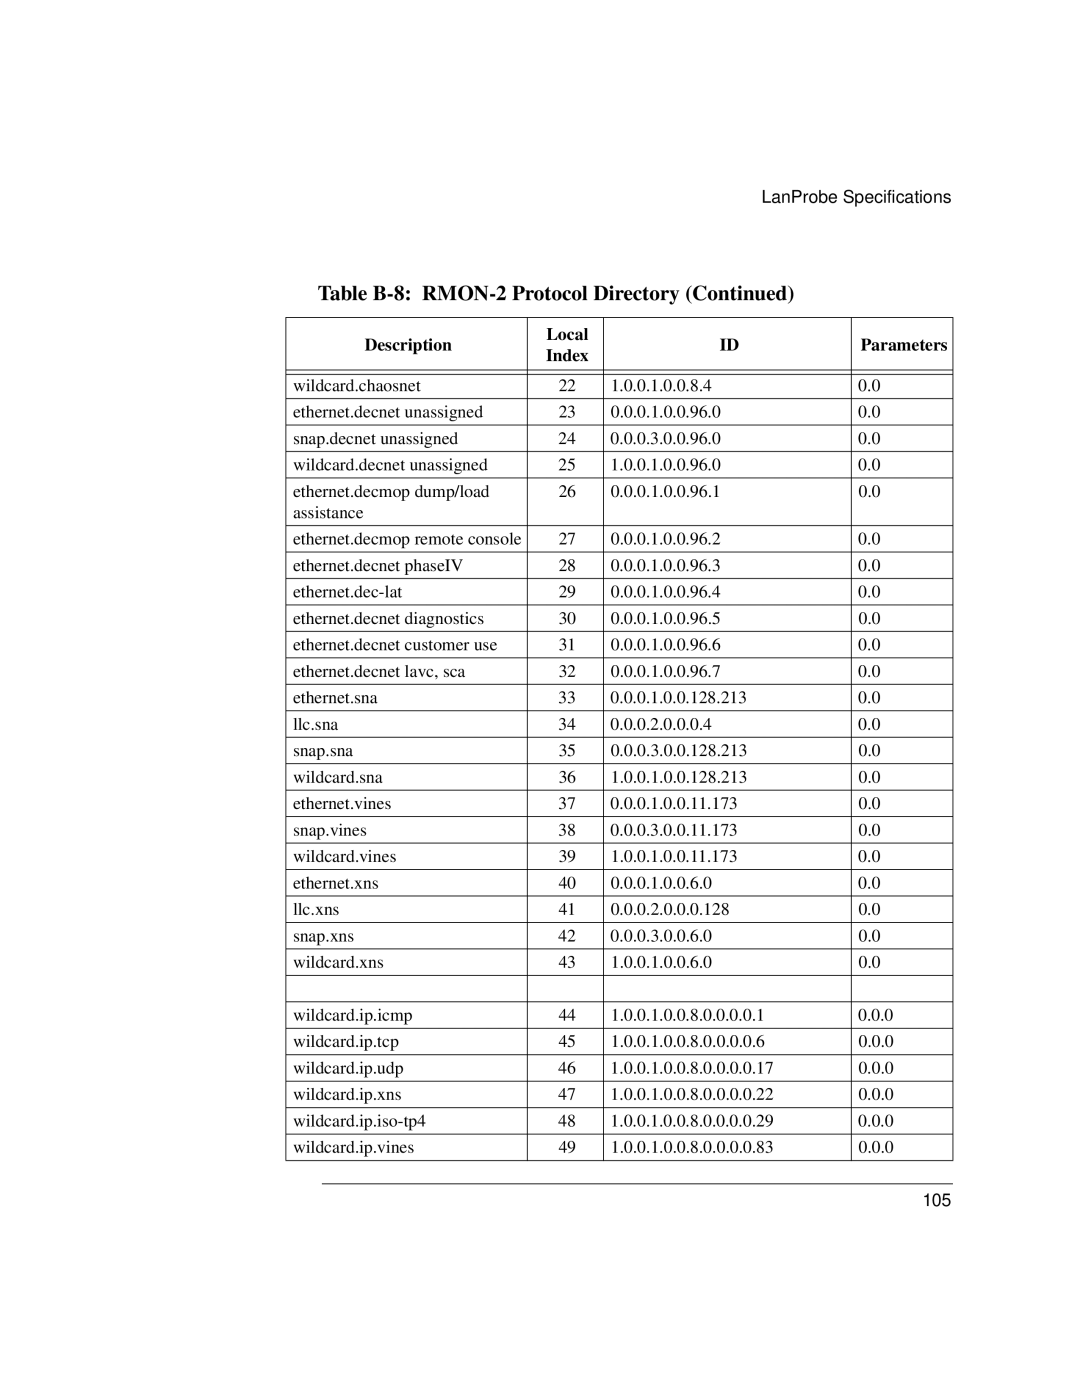 IBM 4986B LanProbe manual Table B-8 RMON-2 Protocol Directory Continued, Description, Local, Parameters, Index 